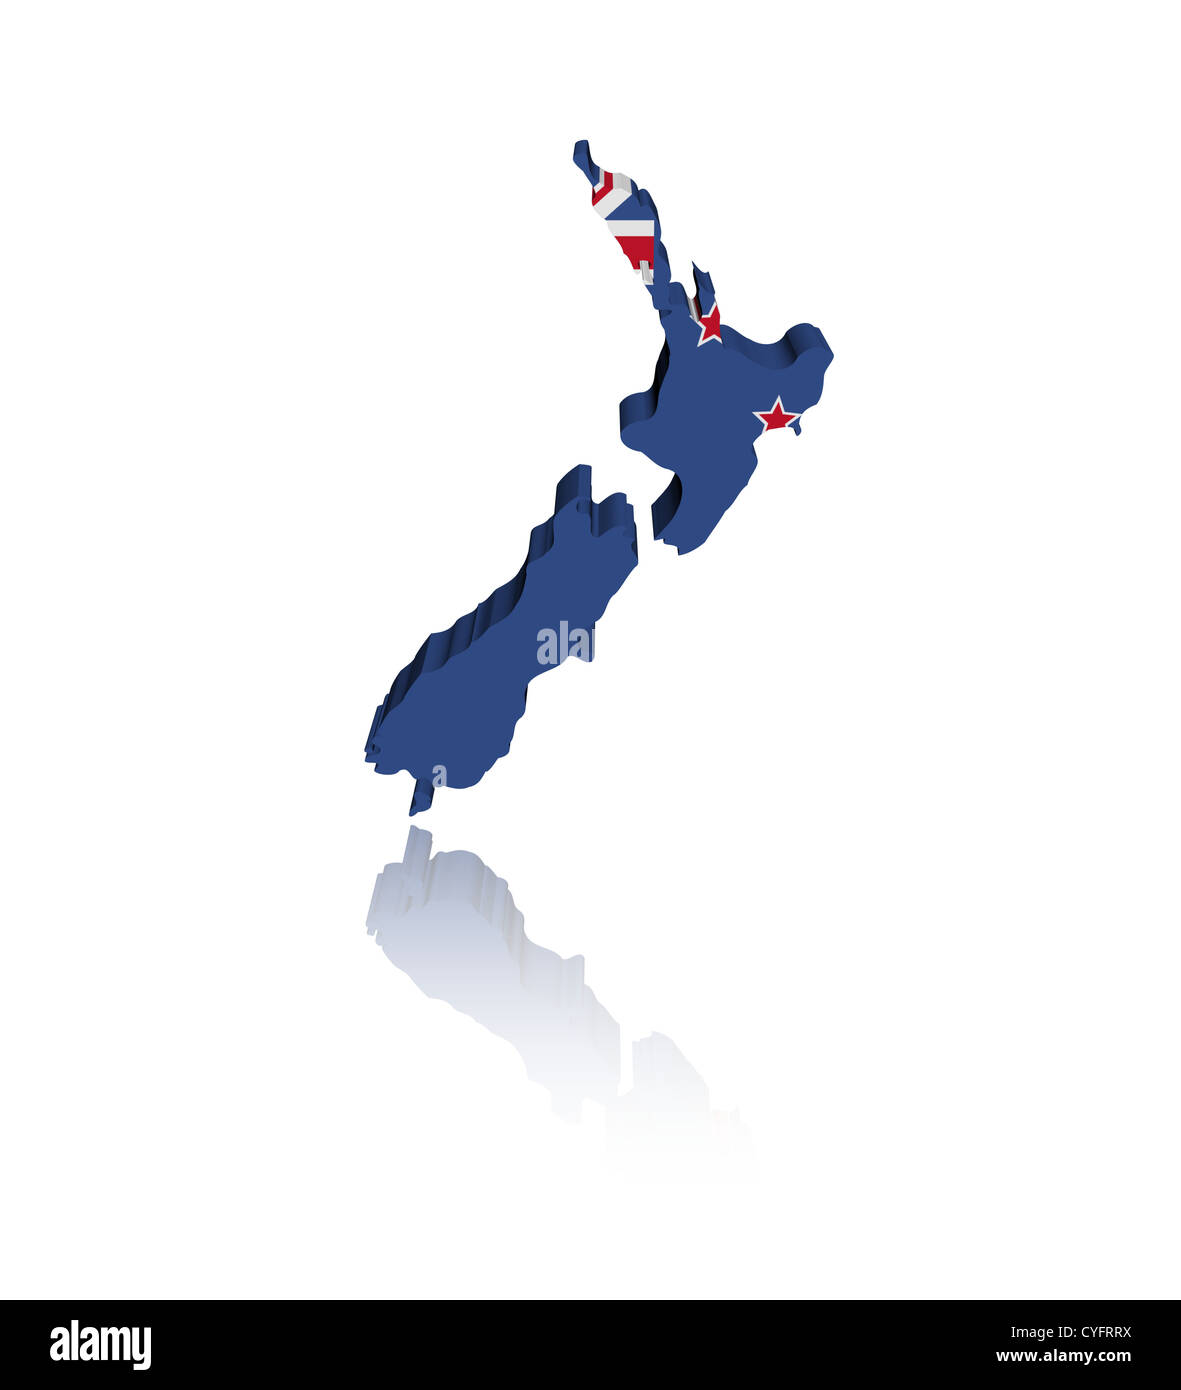 New Zealand map flag with reflection illustration Stock Photo